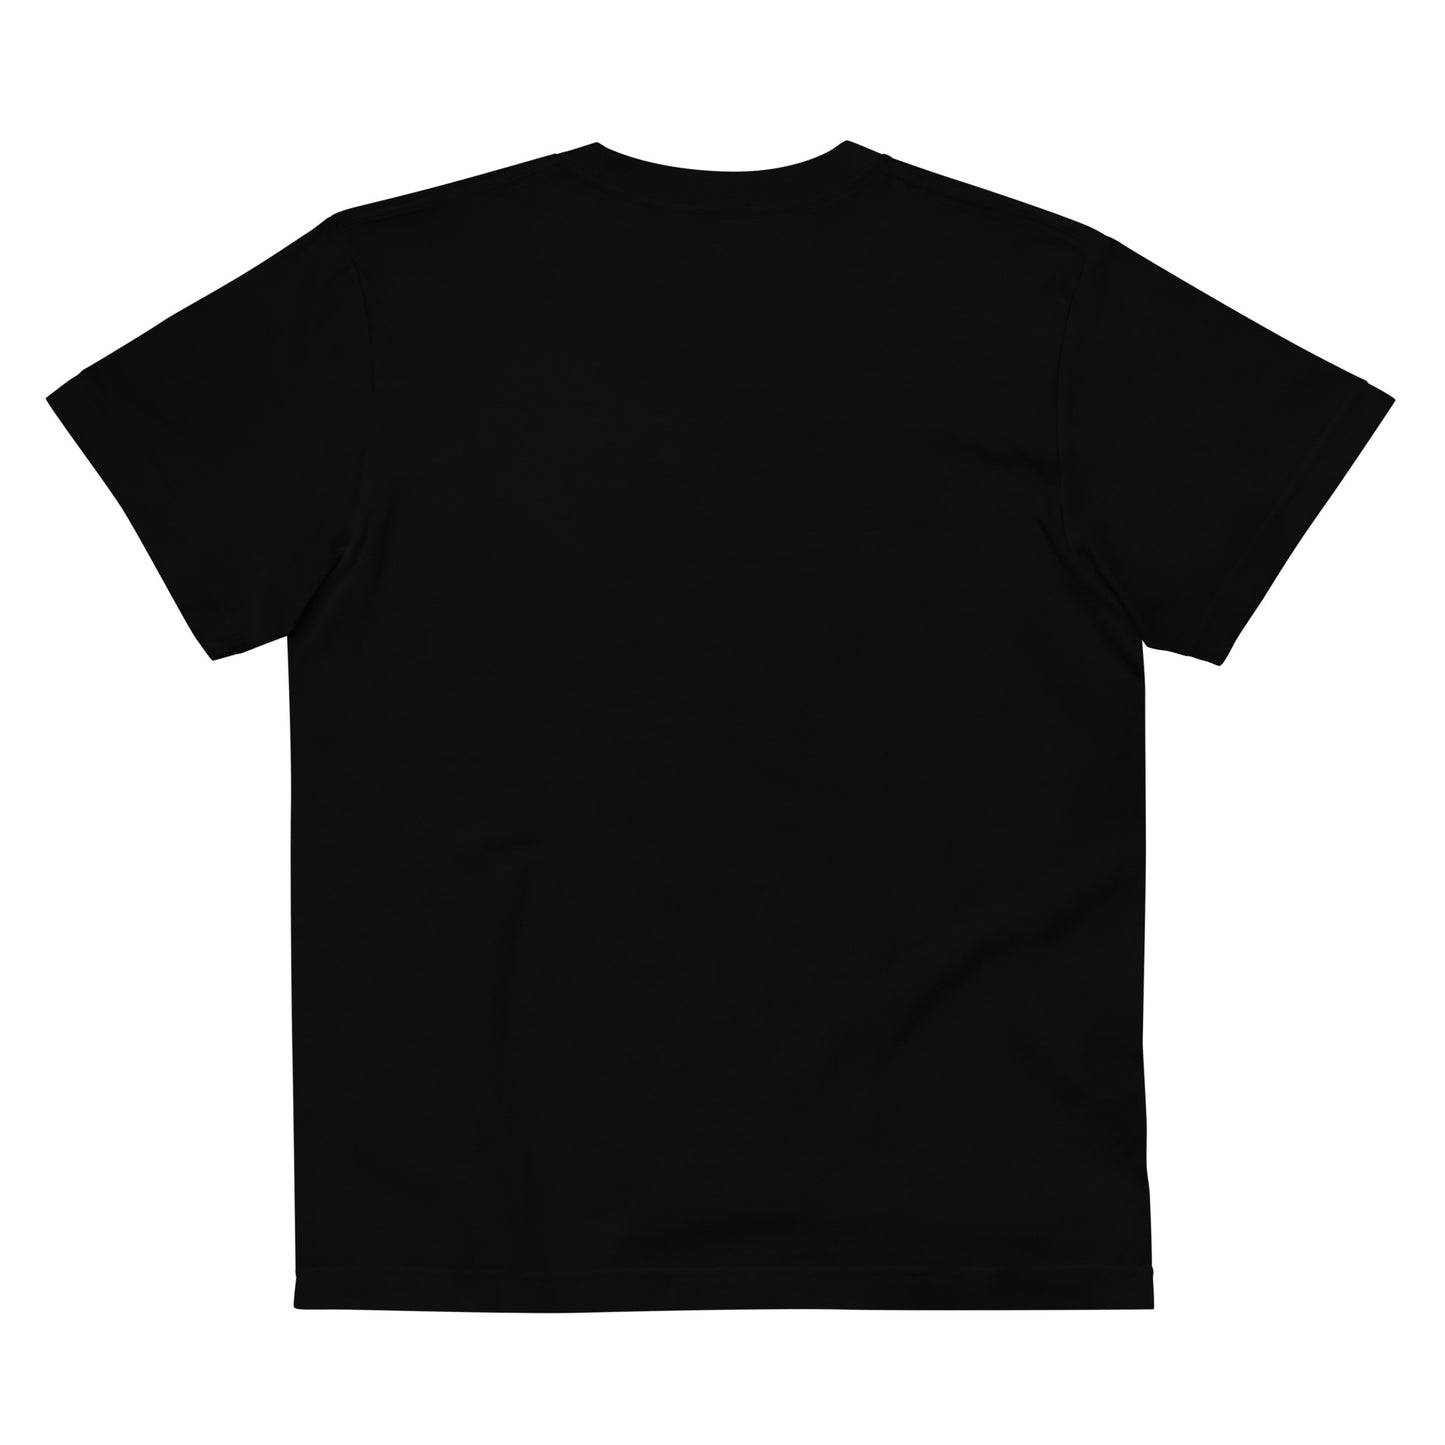 E035 - T-shirt/Bentuk standard (MX menang : Hitam/Perak)